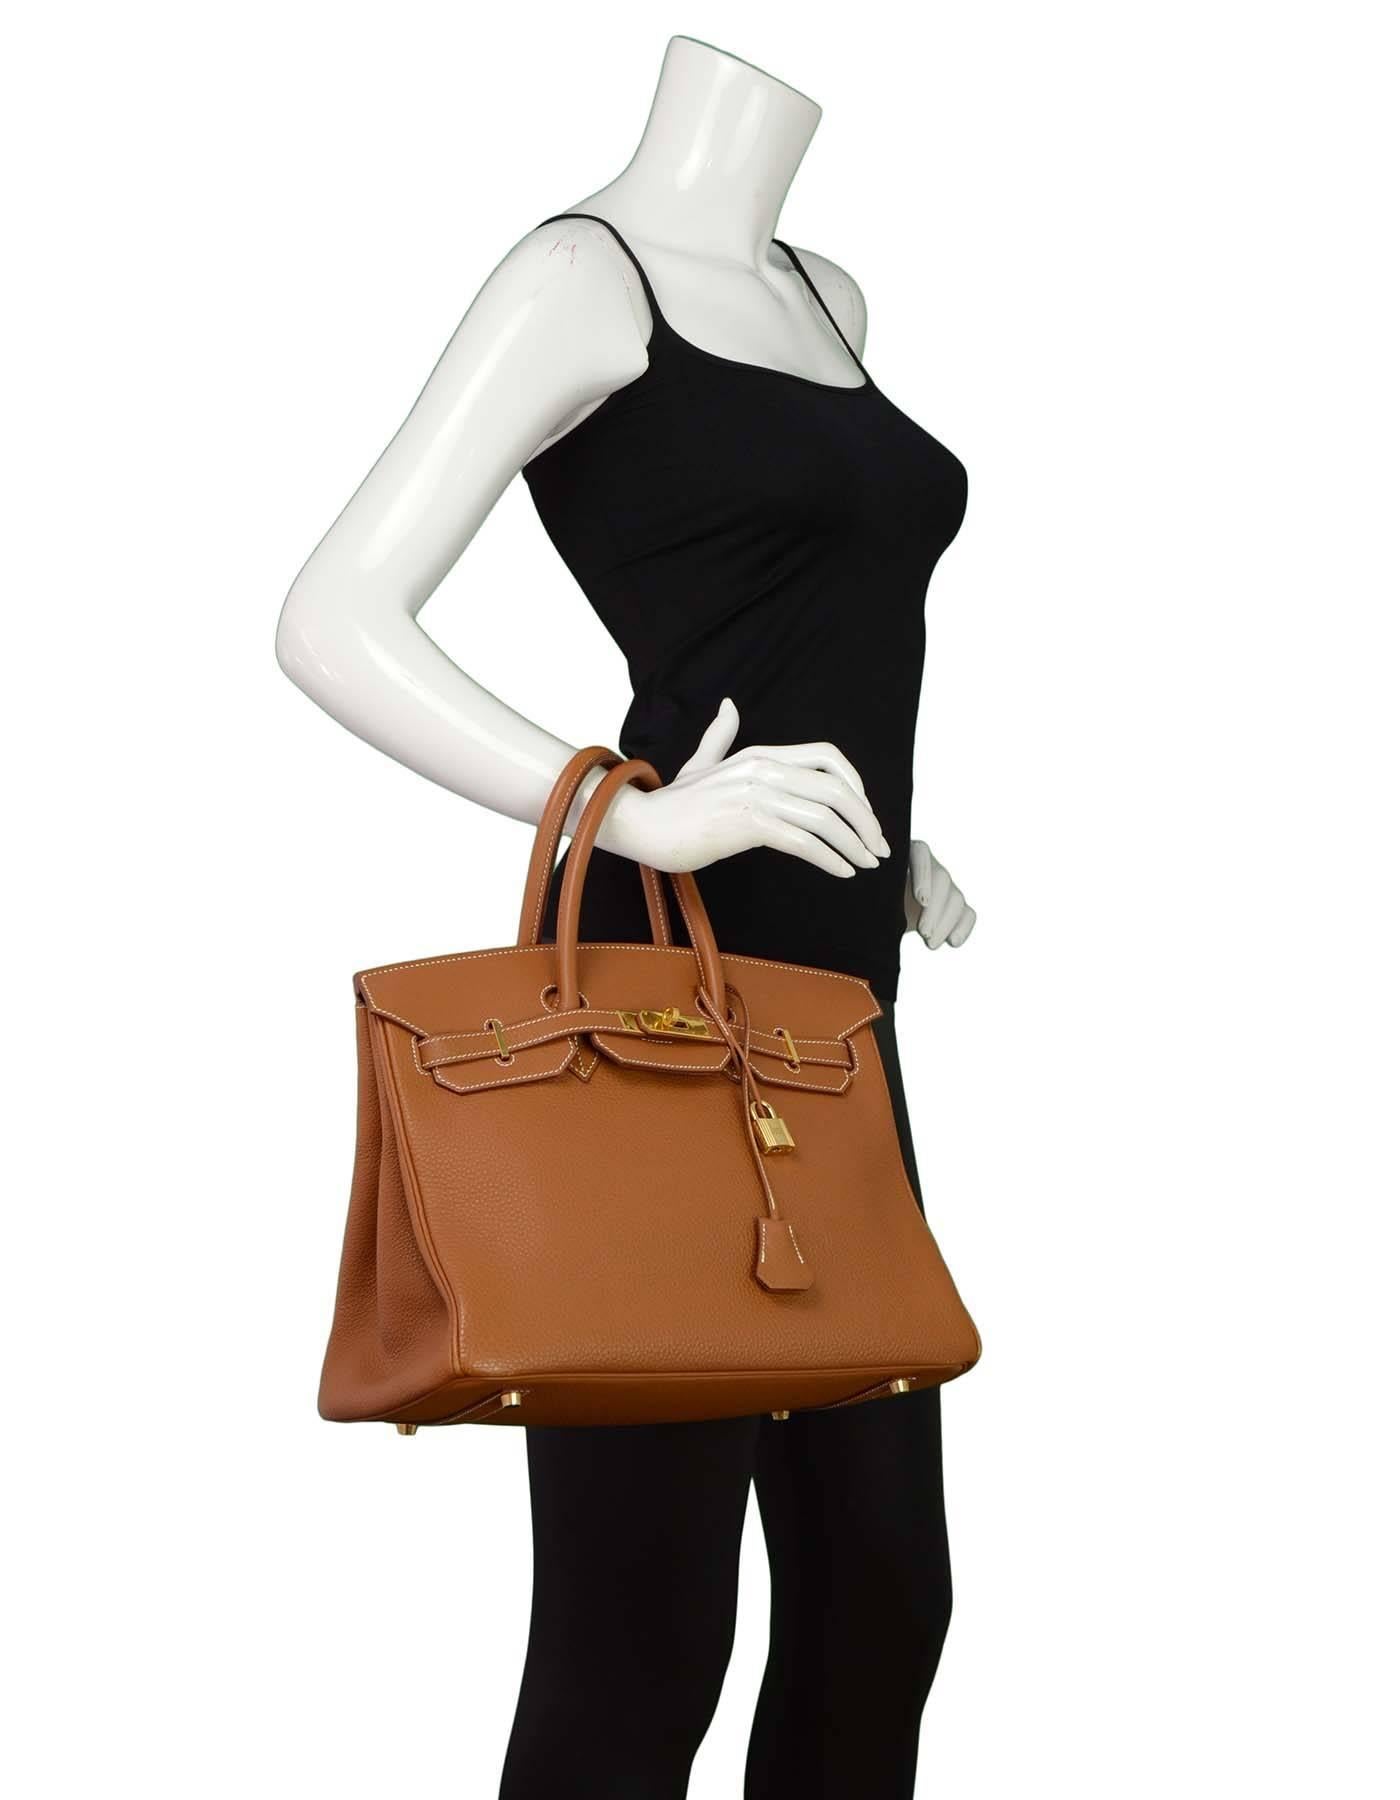 Hermes Gold/Tan Togo Leather 35cm Birkin Bag w/ Box & Dust Bag 2